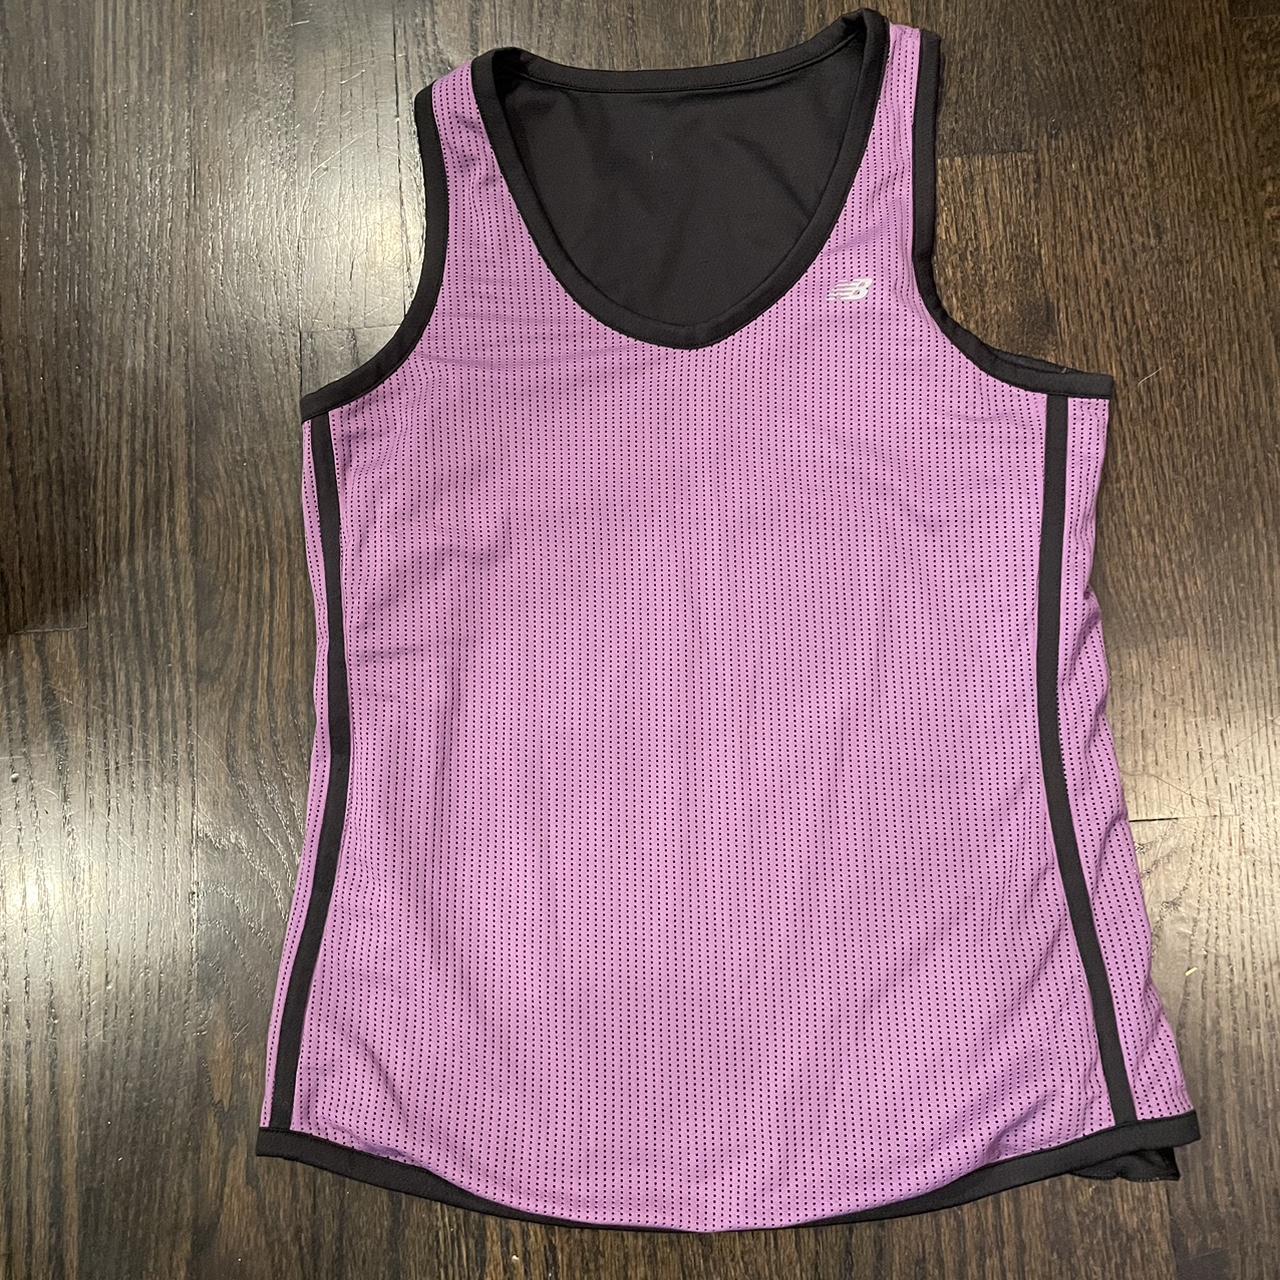 New Balance Women's Purple and Black Vest (4)